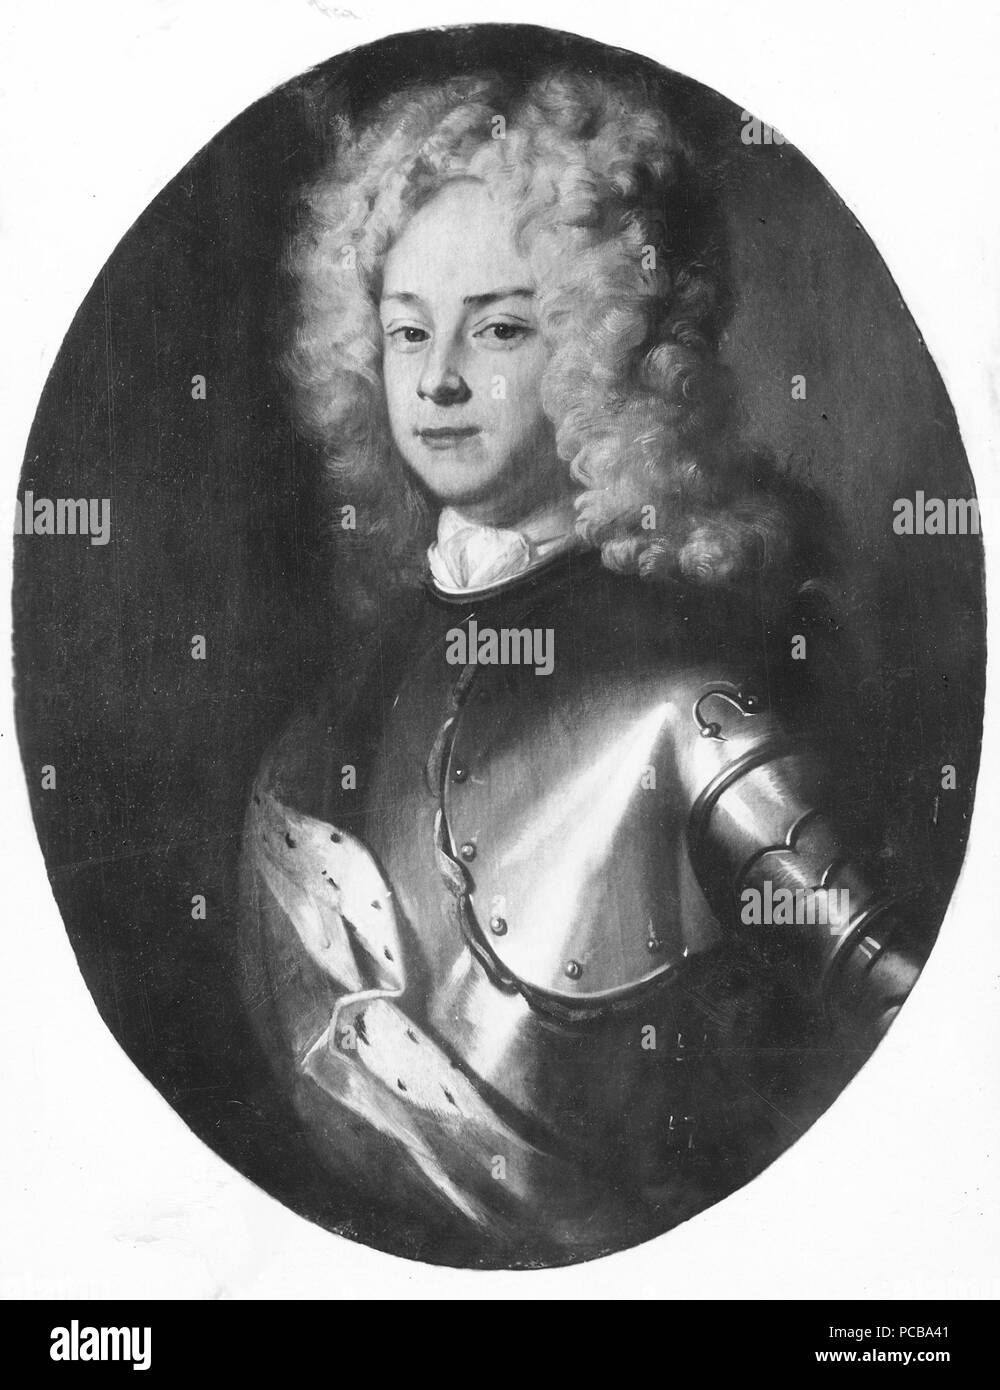 49 Johan Vilhelm, 1677-1707, hertig av Sachsen-Gotha (David von Krafft) - Nationalmuseum - 15557 Stock Photo